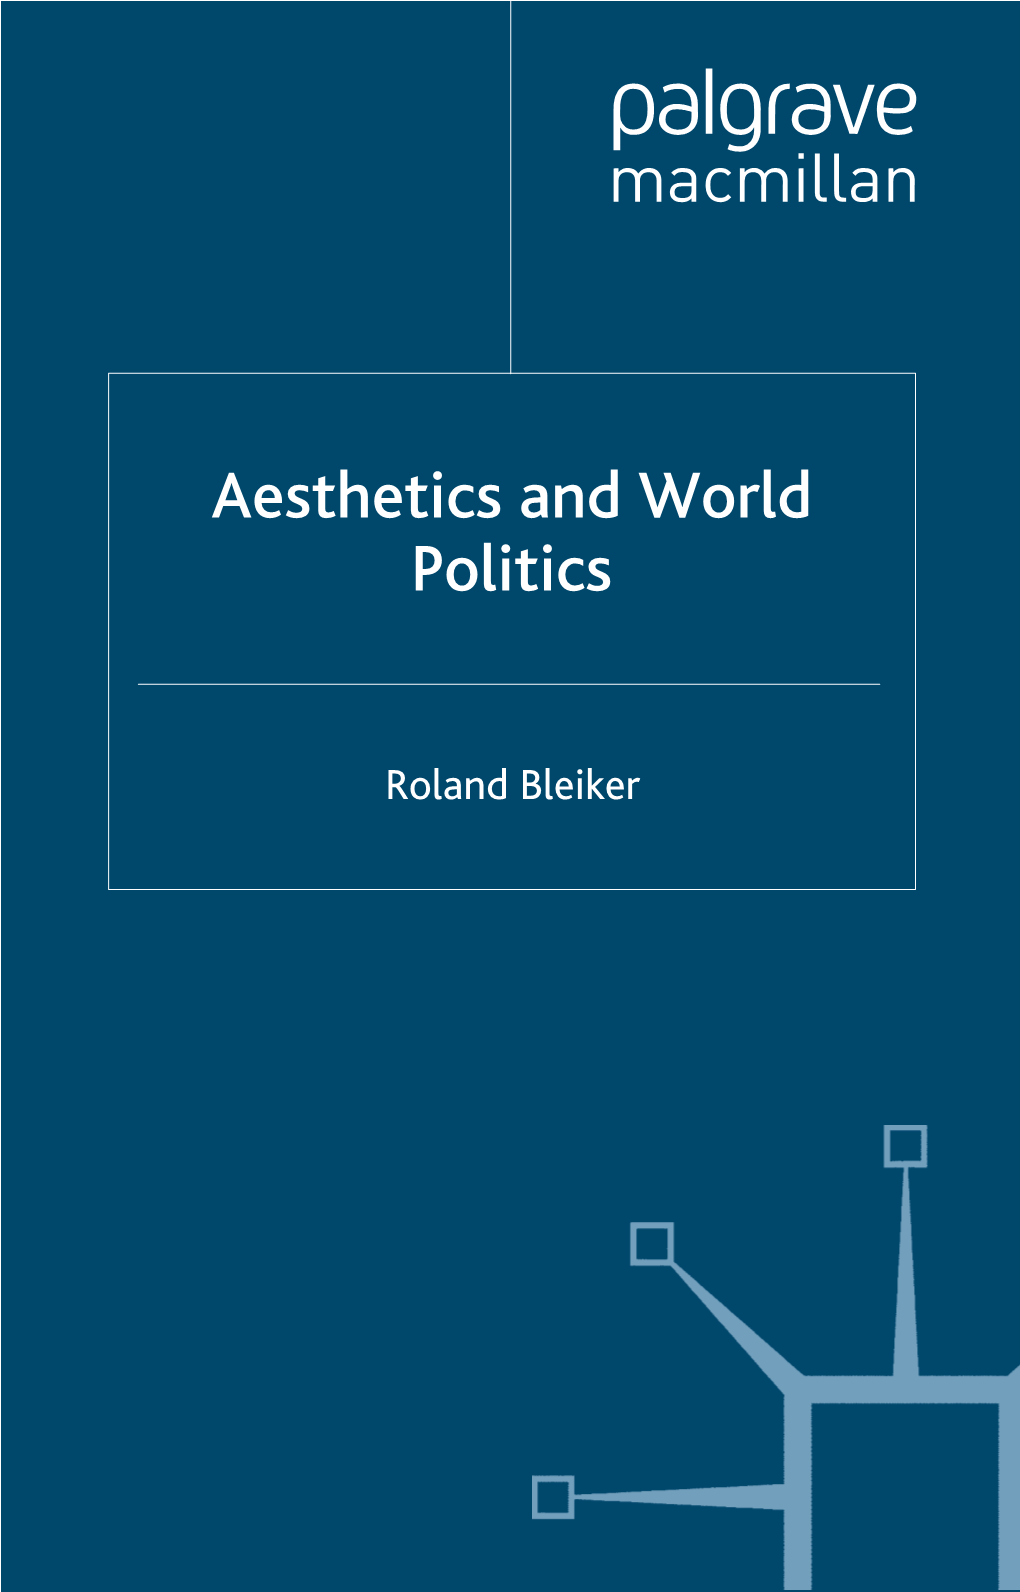 Aesthetics and World Politics